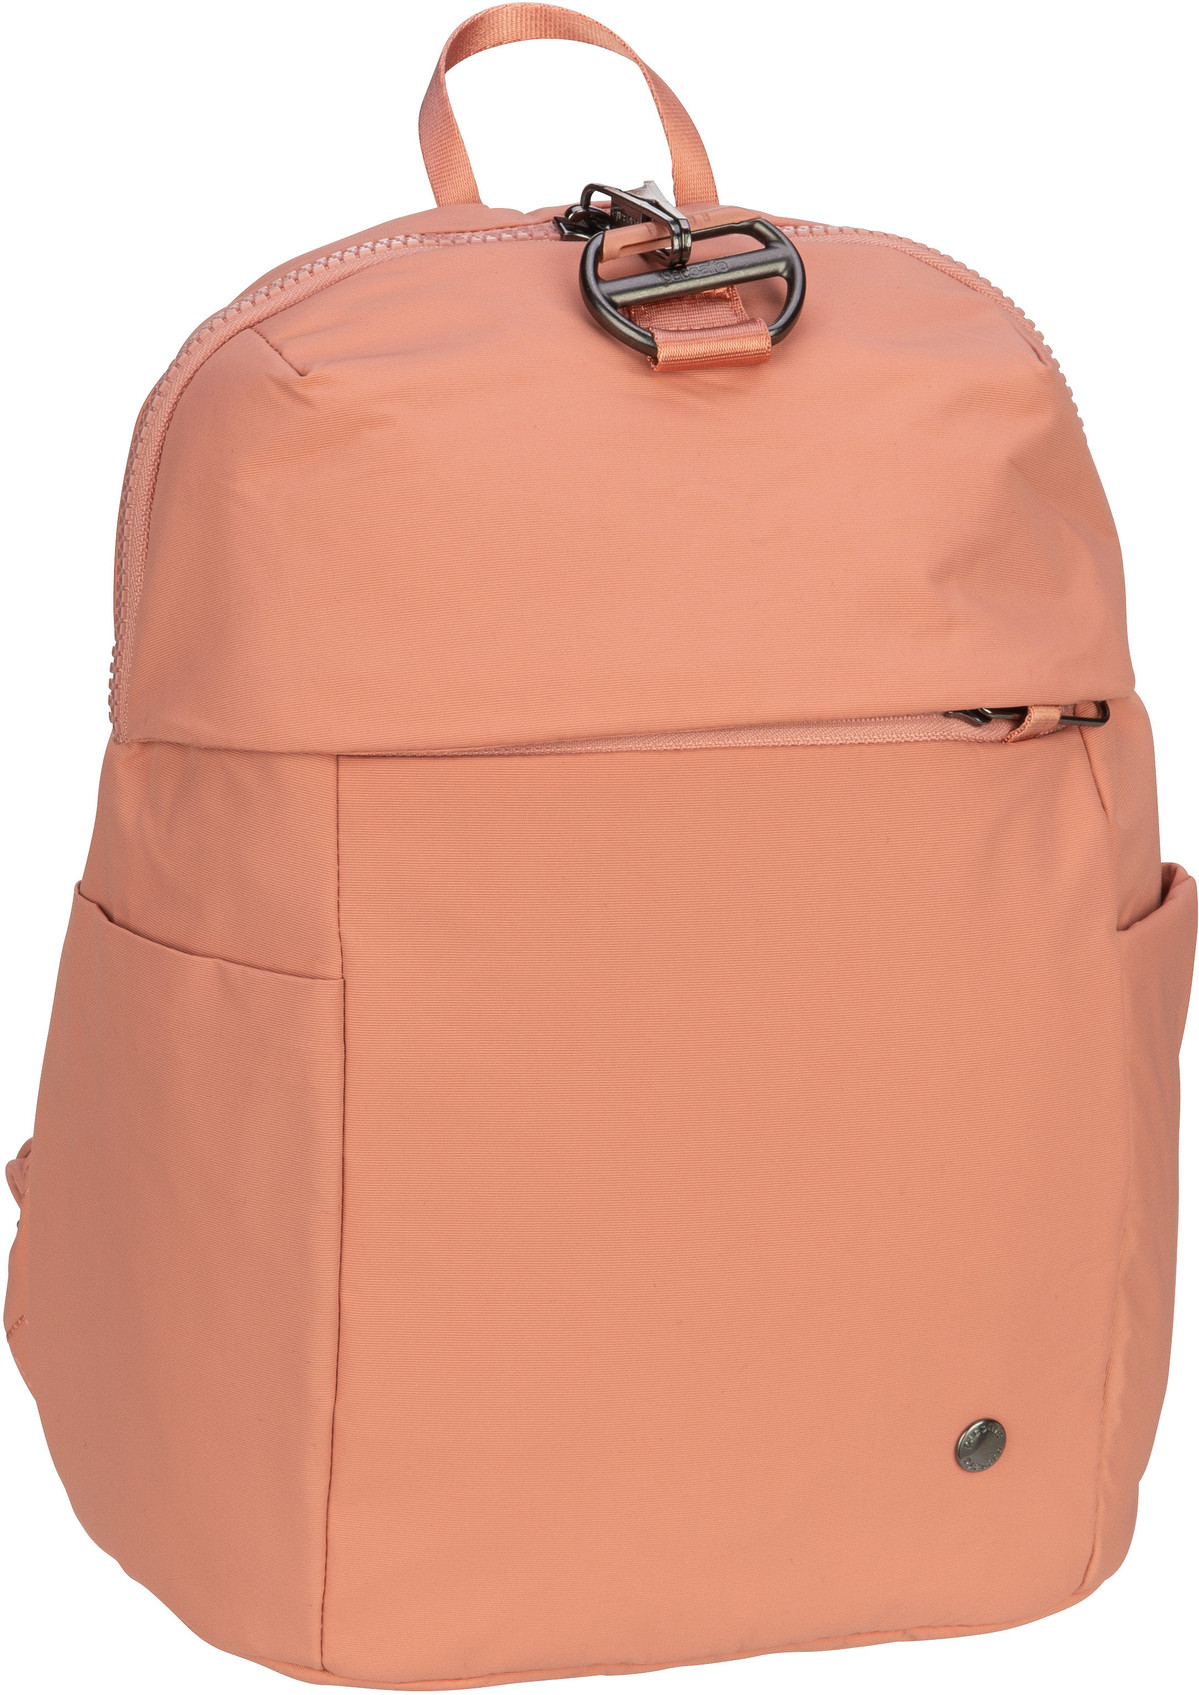 Pacsafe Citysafe CX Backpack Petite - Econyl Rose